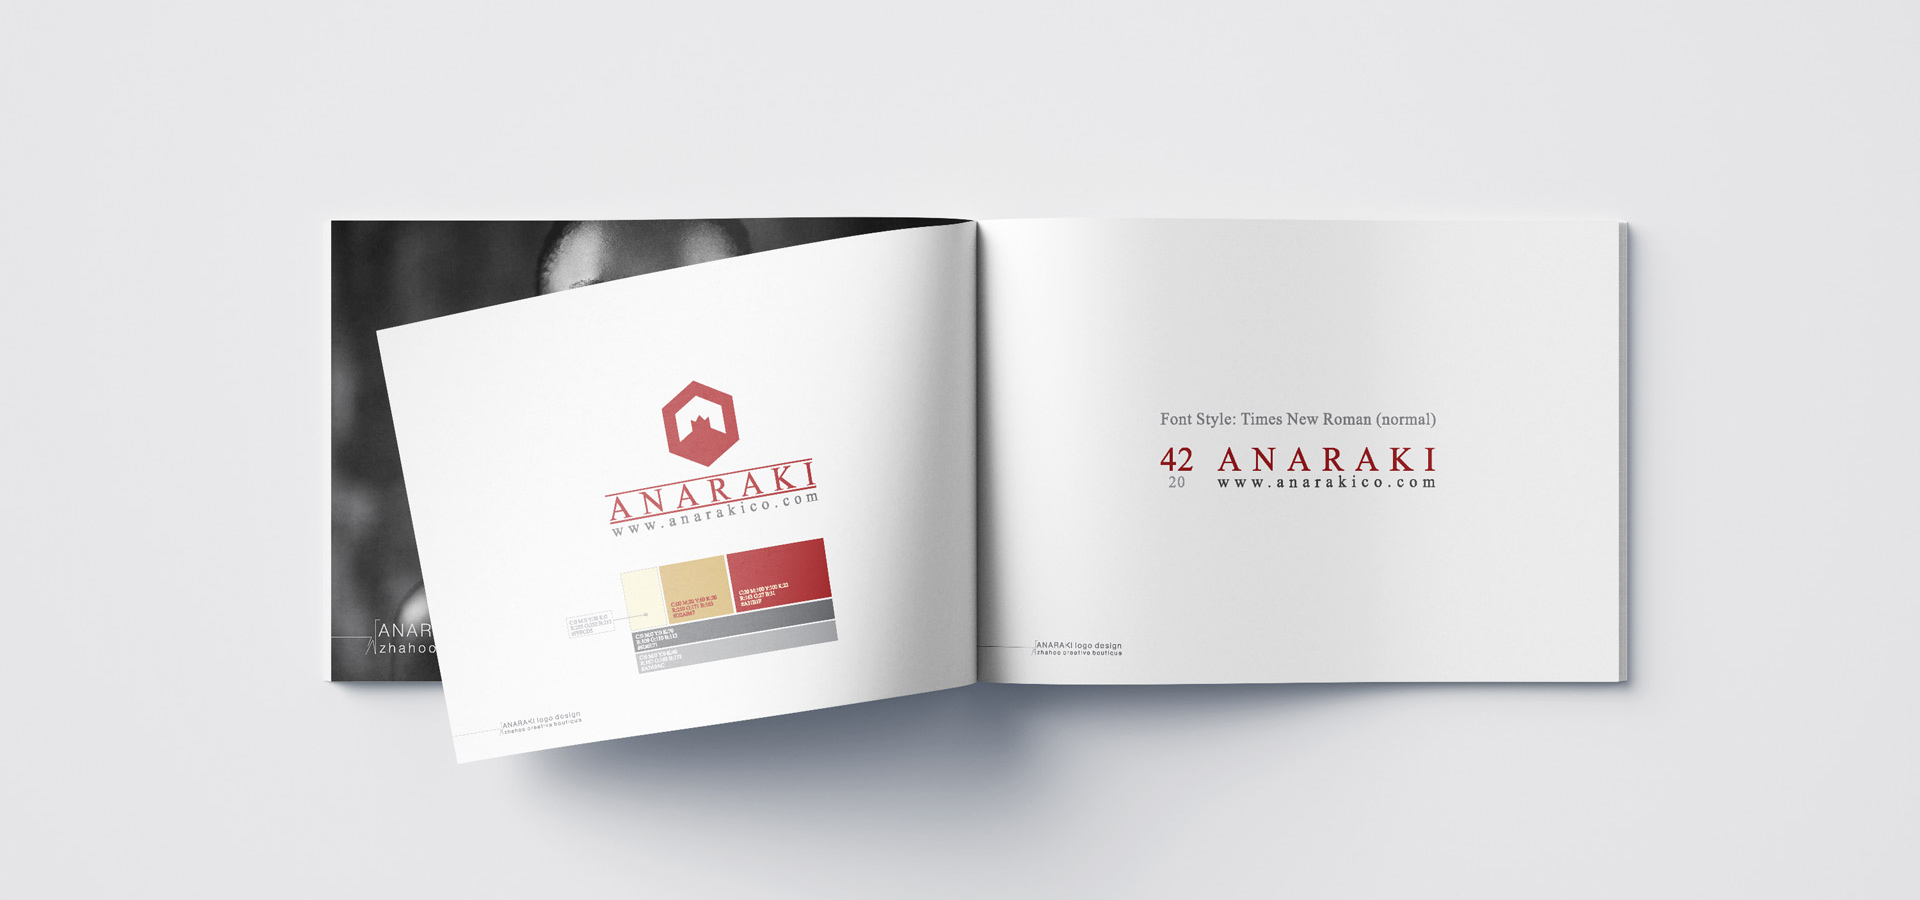 Anaraki Brandbook Design - Color palette